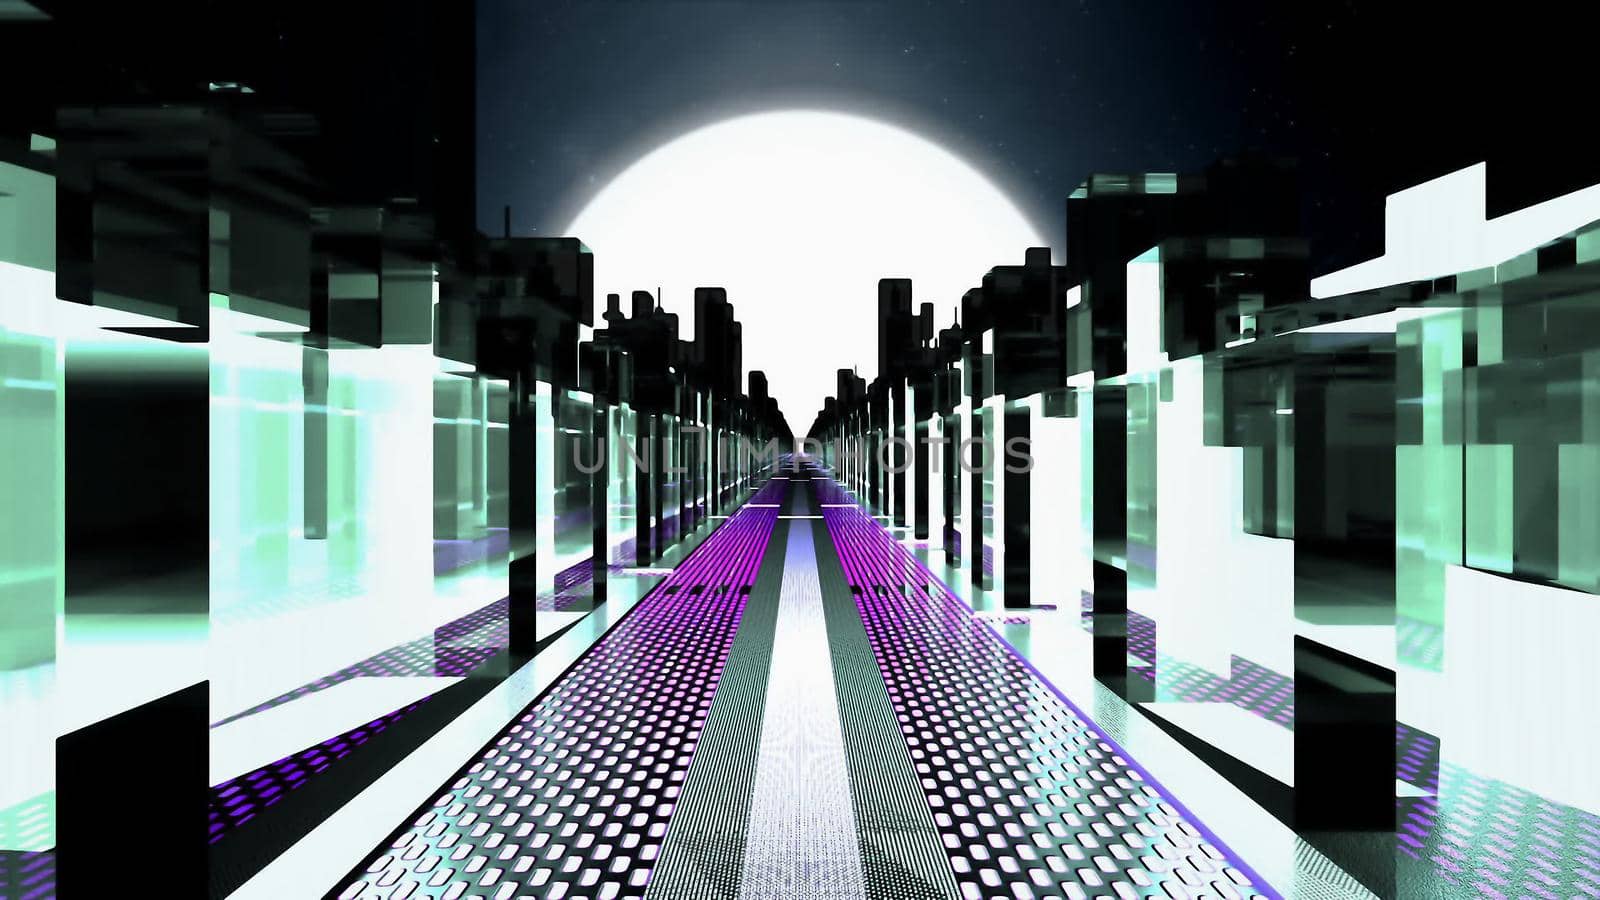 sci-fi city of the future with neon skyscrapers.